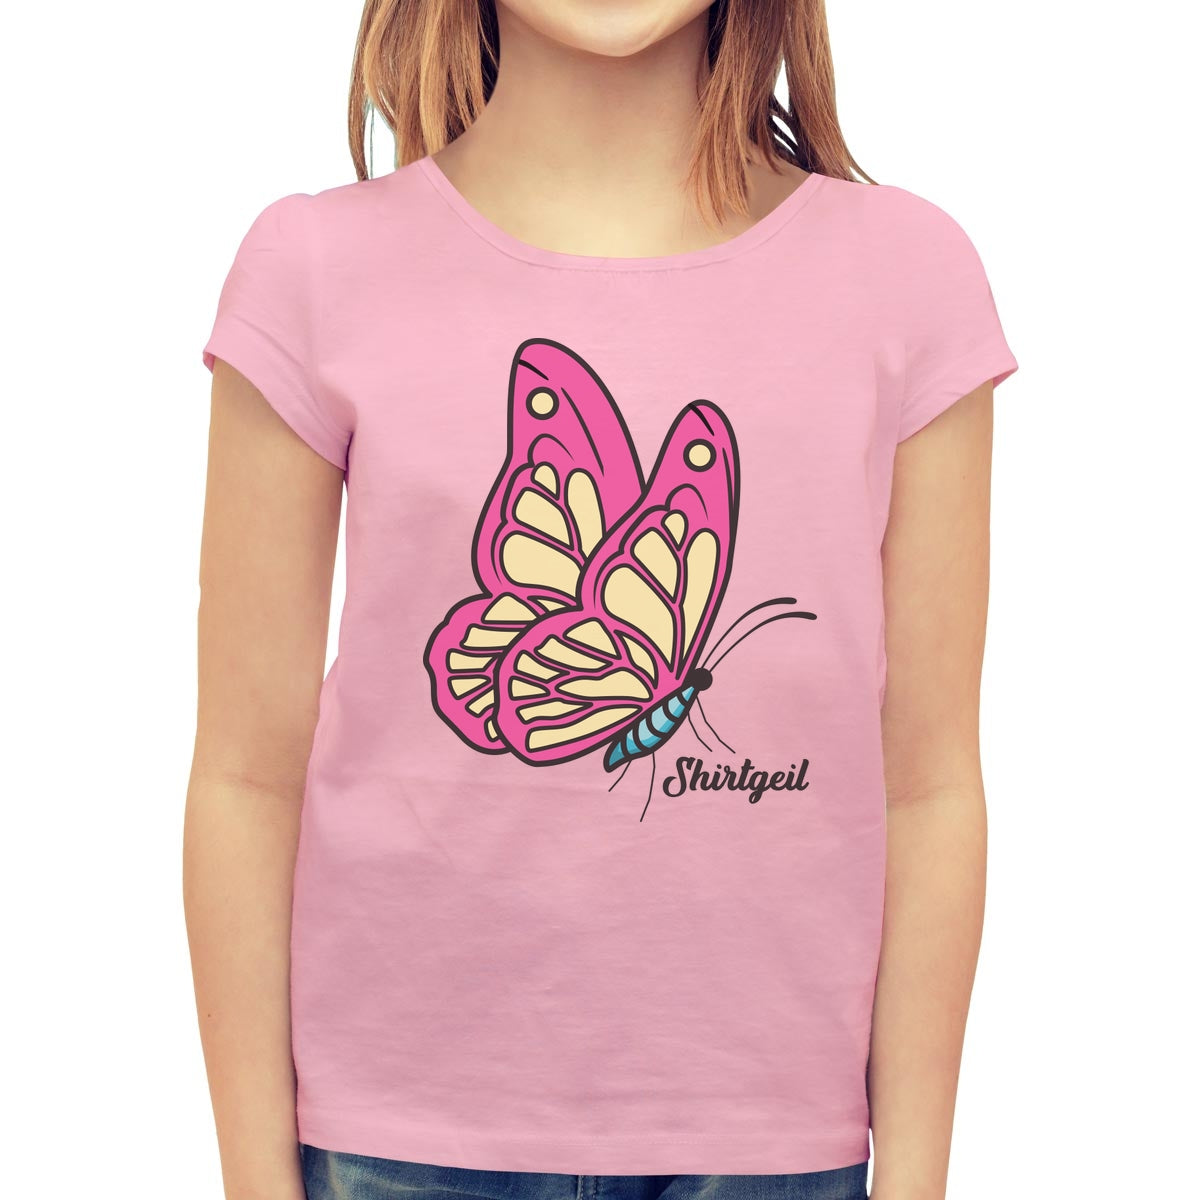 T-Shirt Mädchen Sommer Oberteile Butterfly Schmetterling Mädchen T-Shirt